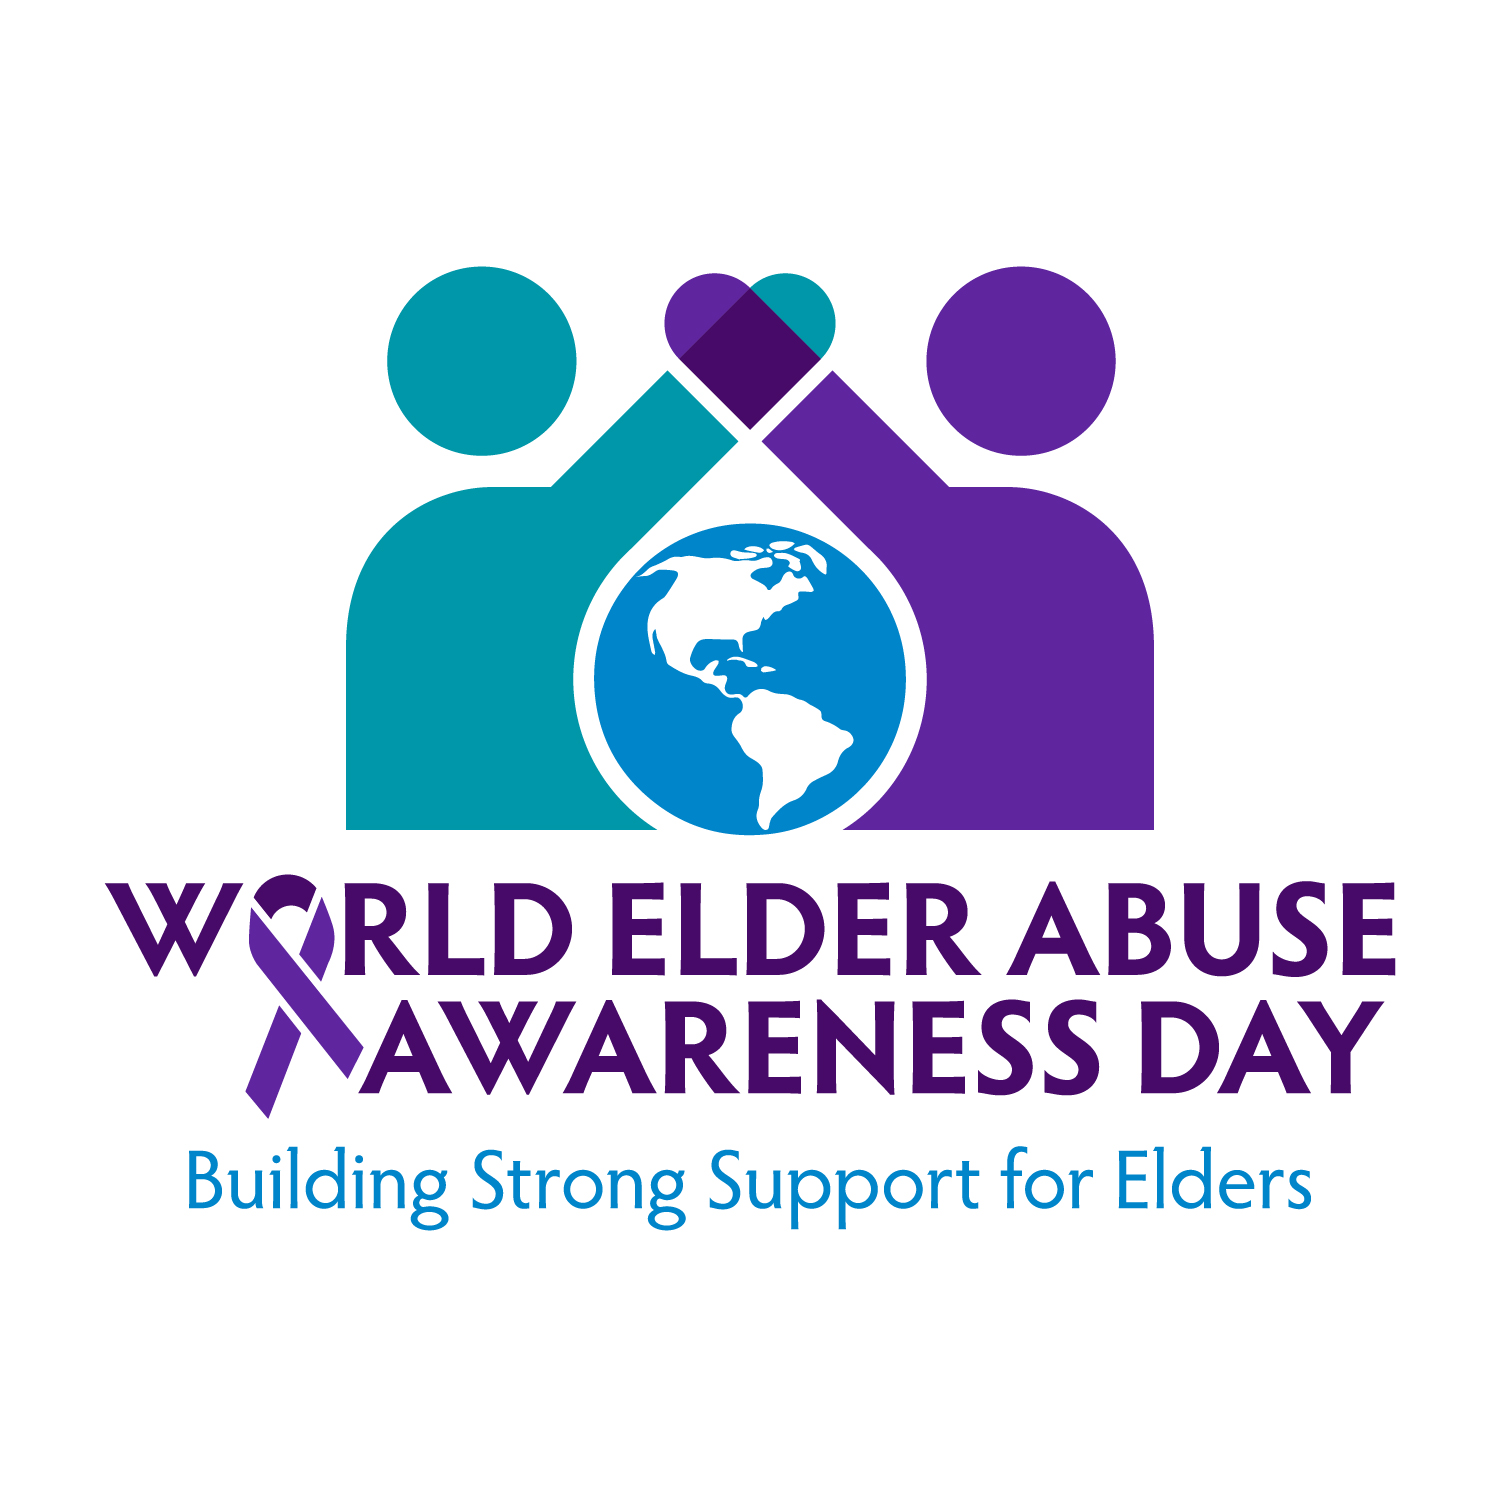 Respecting Elders - Communities Against Elder Abuse